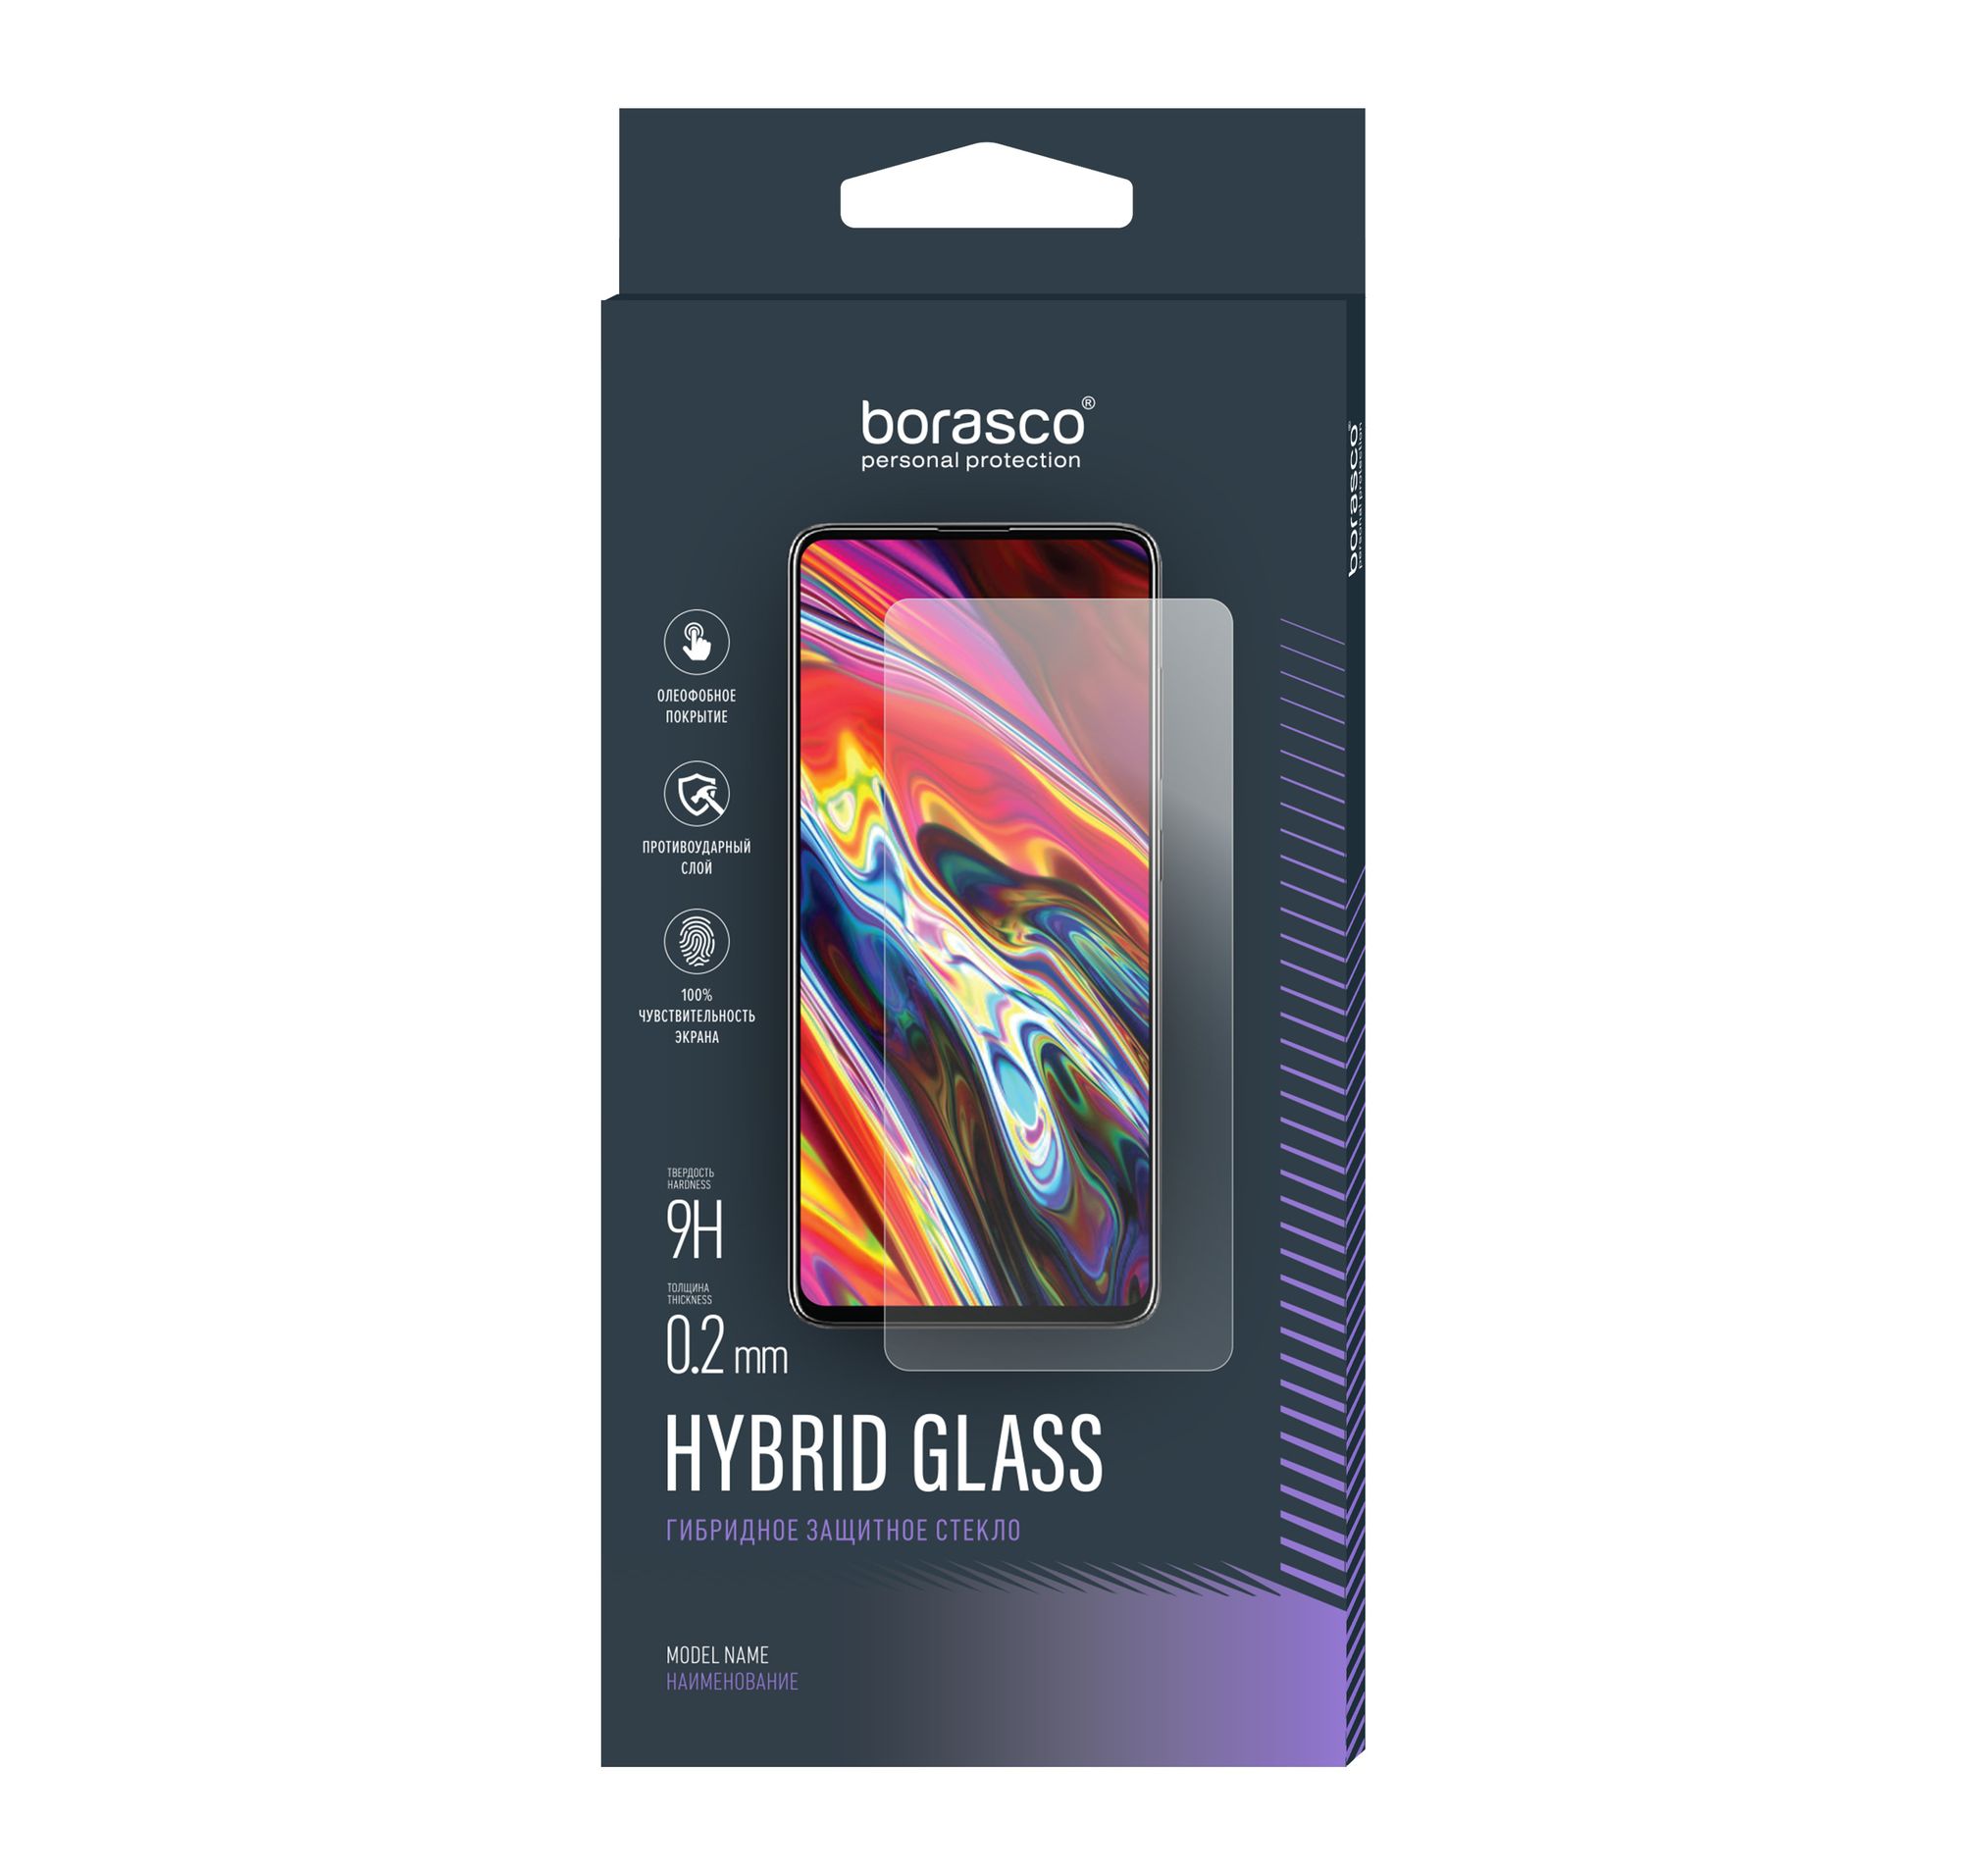 стекло защитное hybrid glass vsp 0 26 мм universal 7 Стекло защитное Hybrid Glass VSP 0,26 мм для Universal 4,7